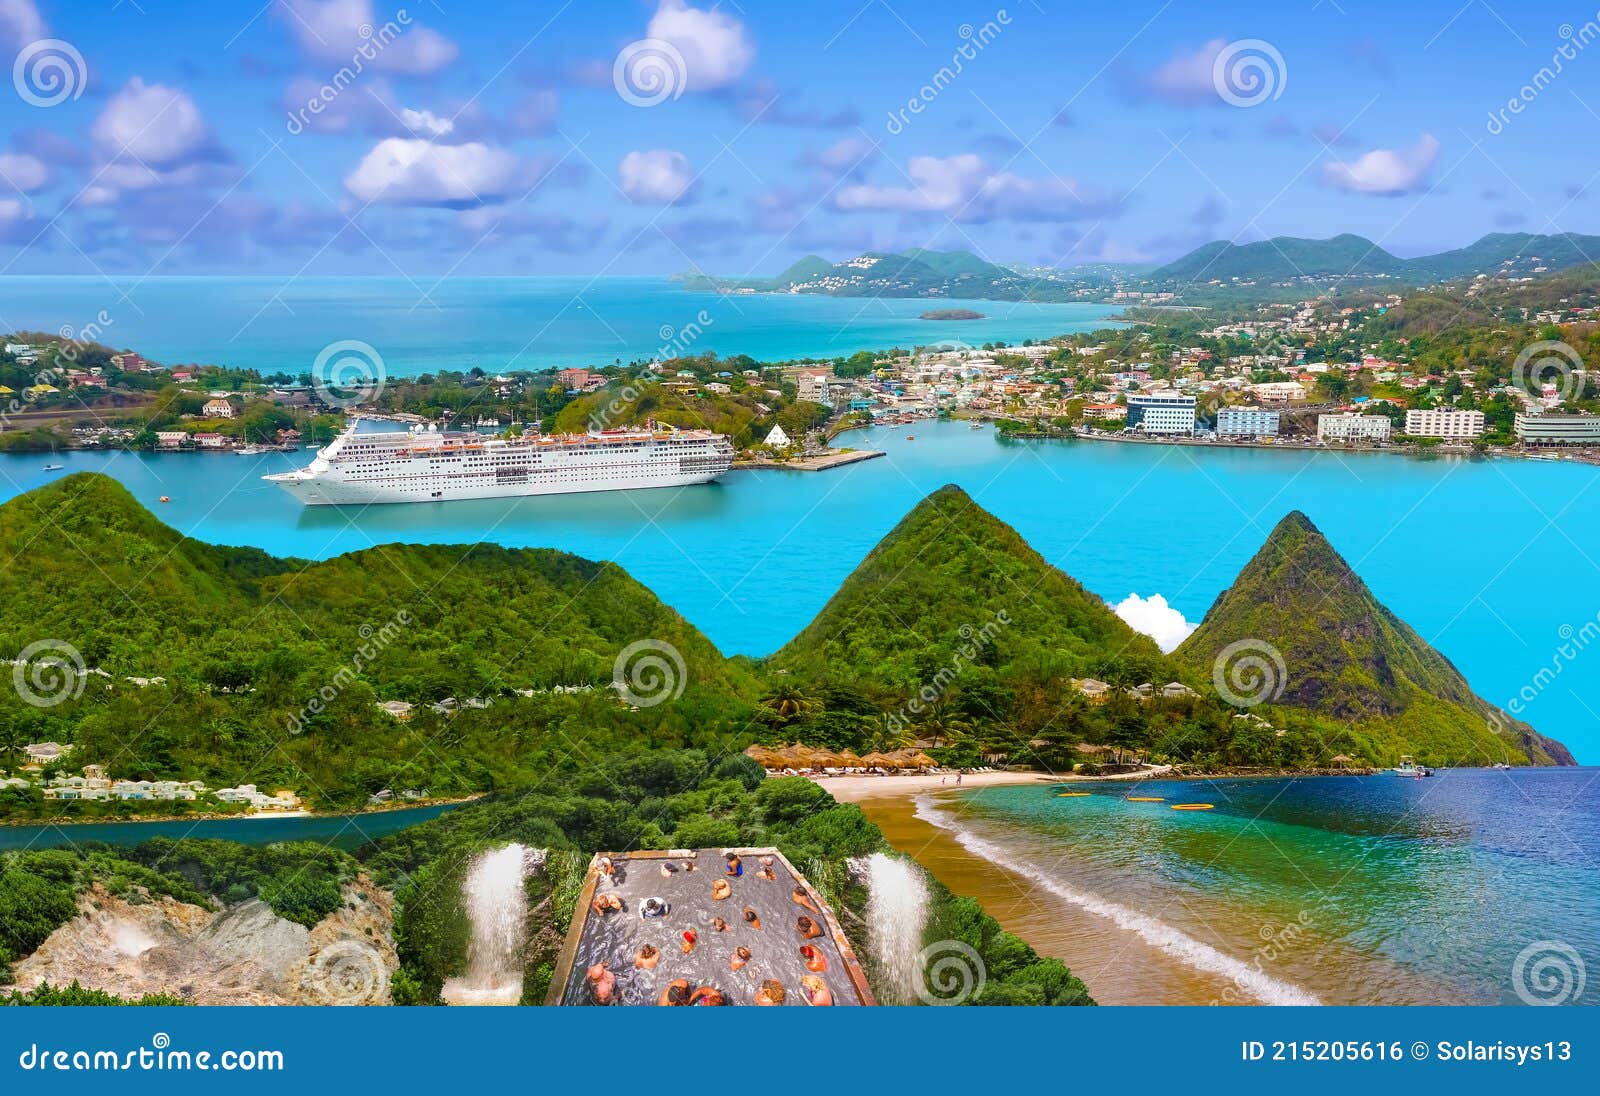 beautiful saint lucia, caribbean islands